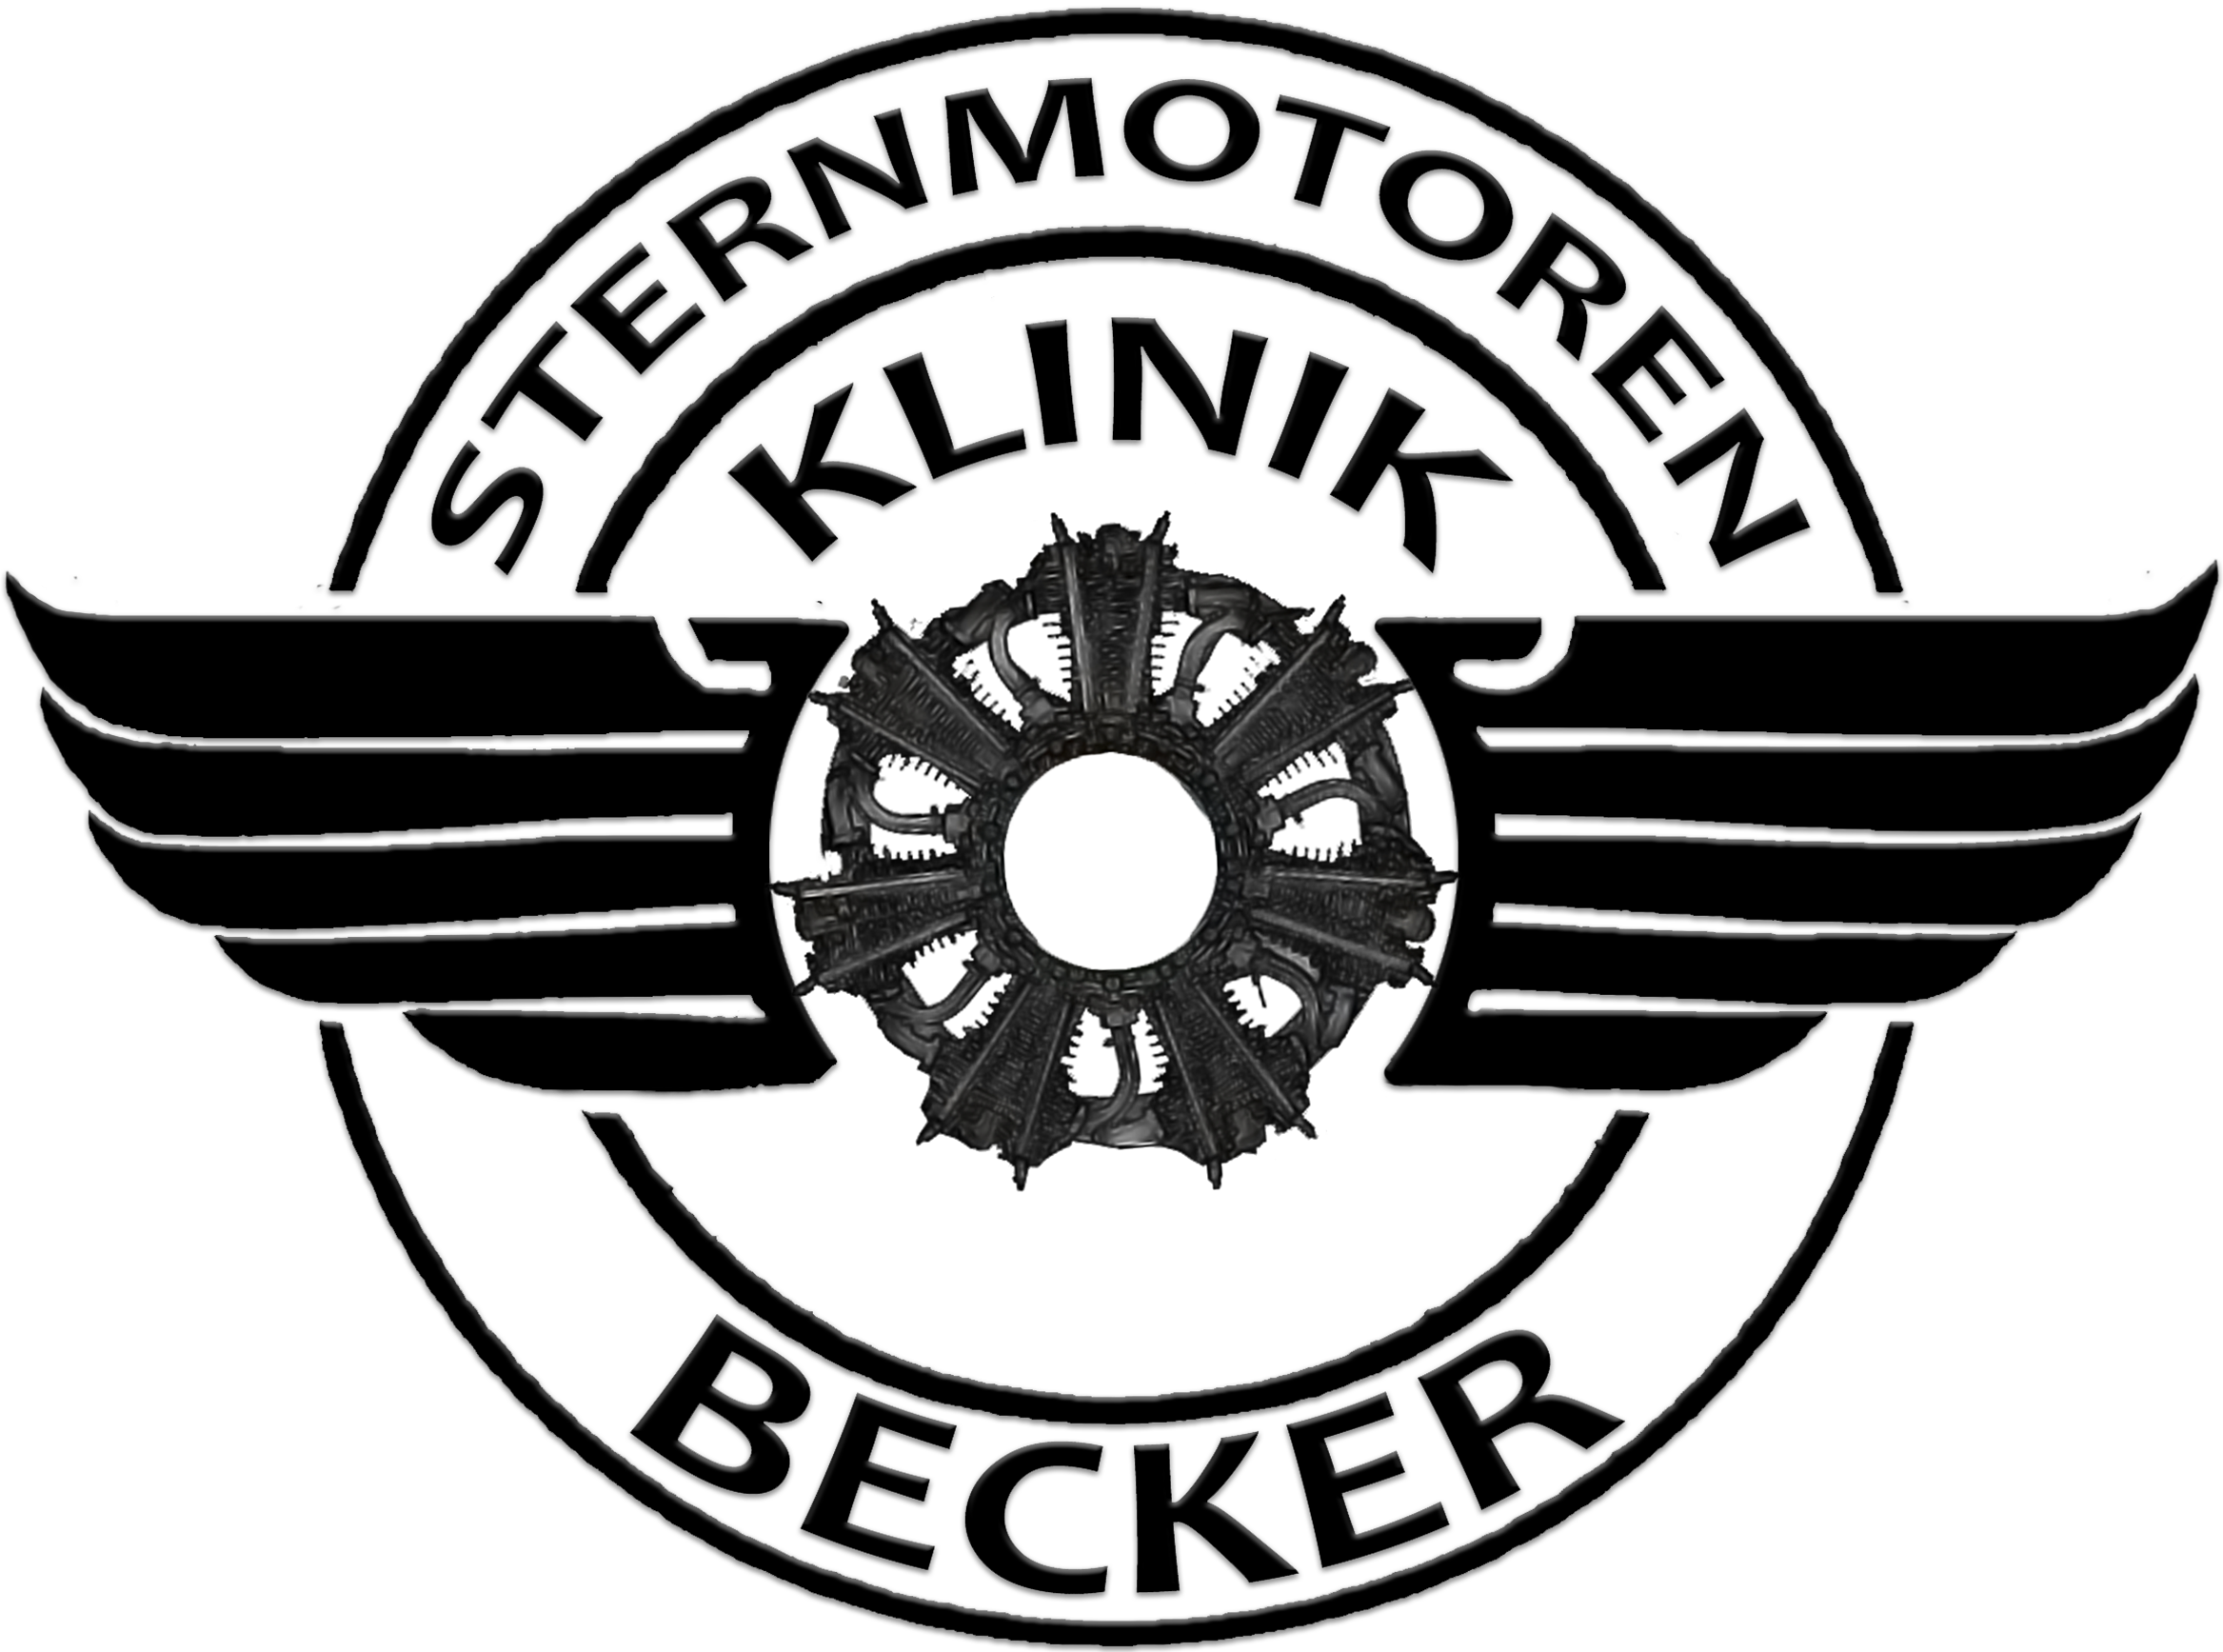 Sternmotorenklinik Becker